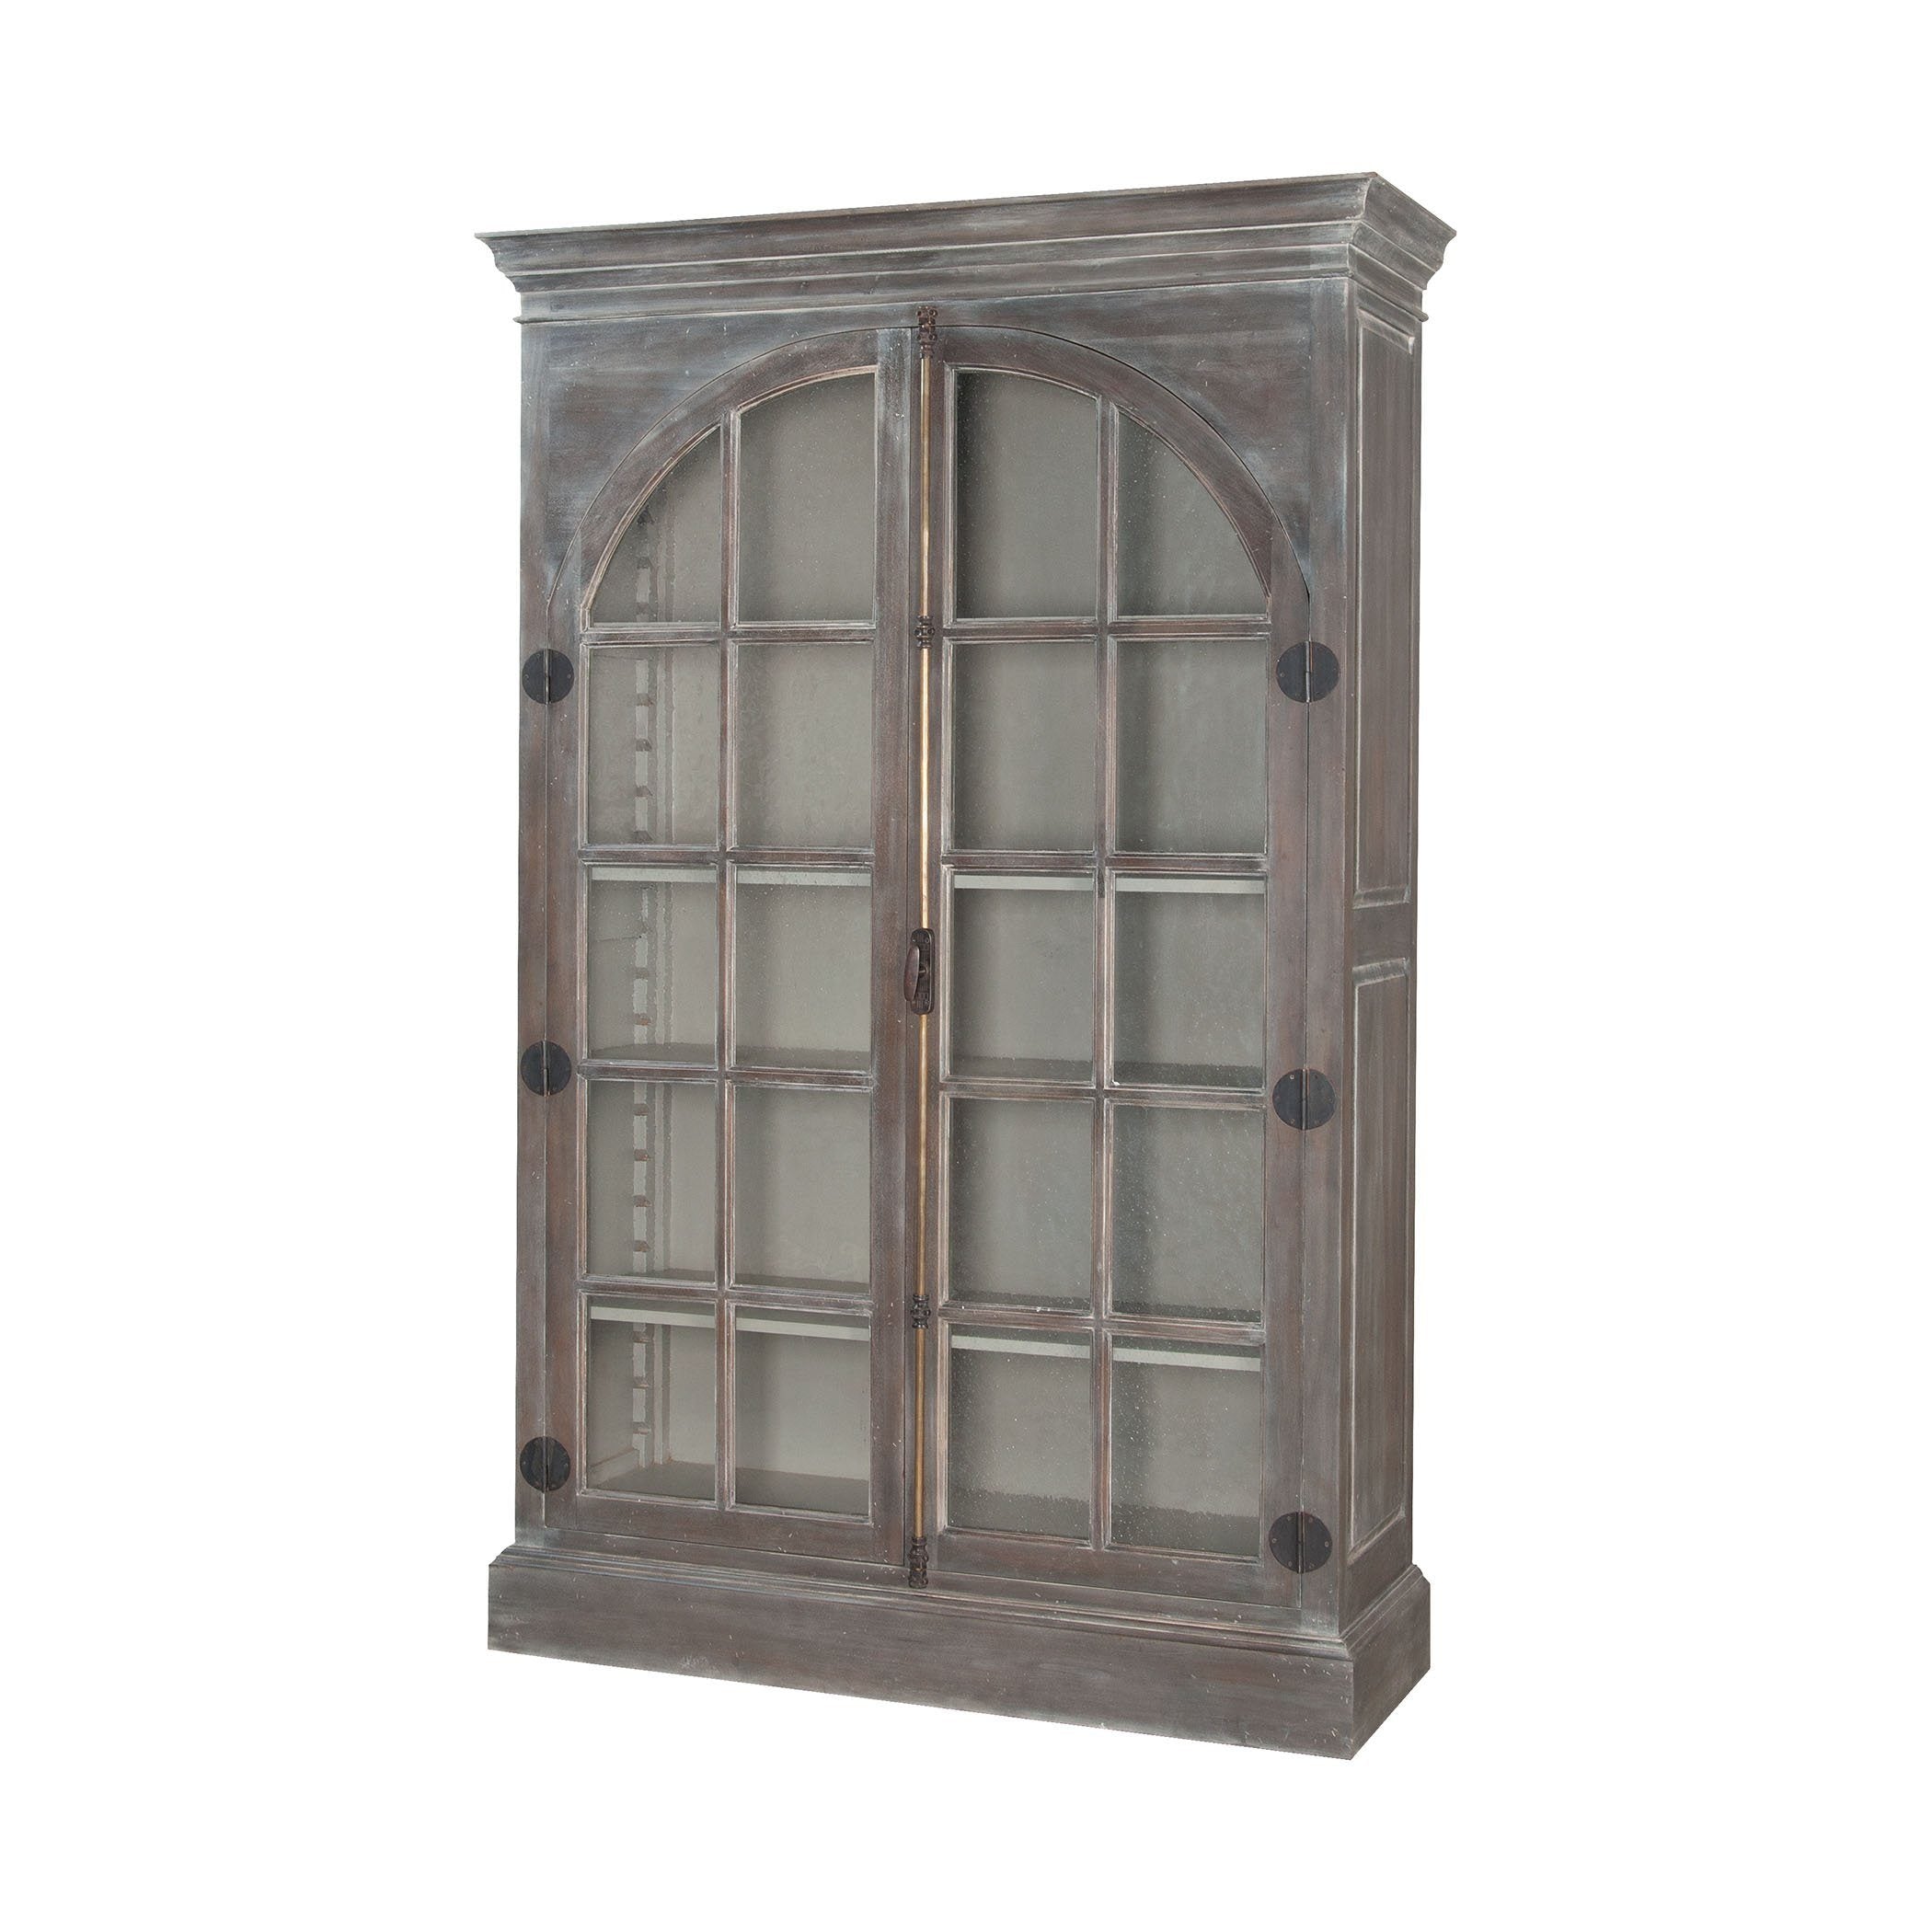 Manor Arched Door Display Cabinet Furniture GuildMaster 